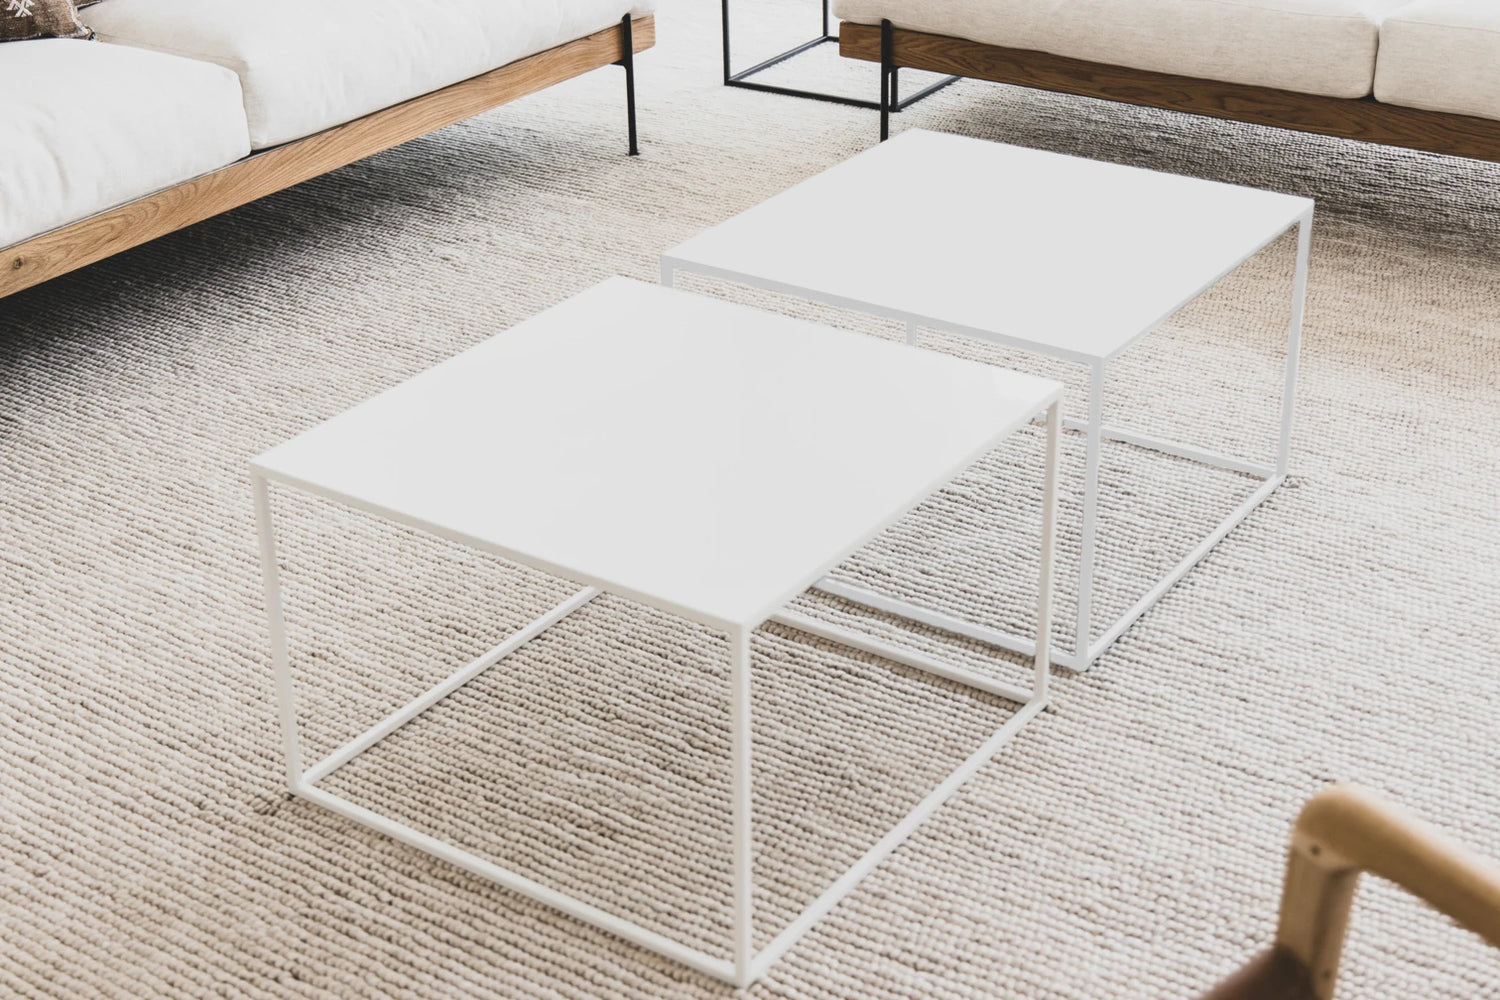 minimalistic tables